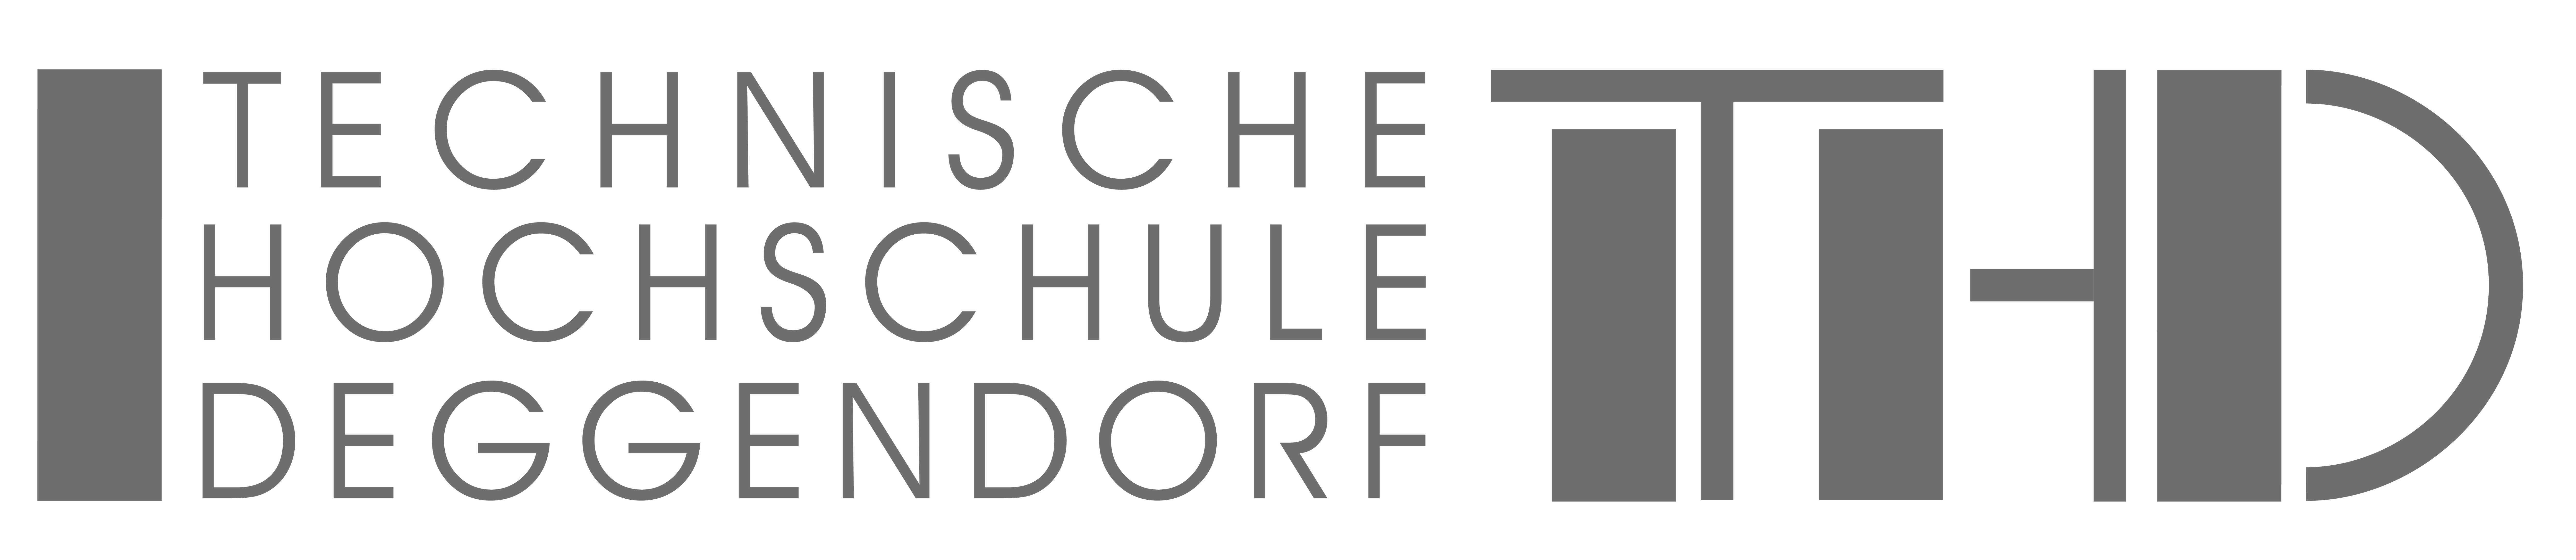 Logo Technische Hochschule Deggendorf